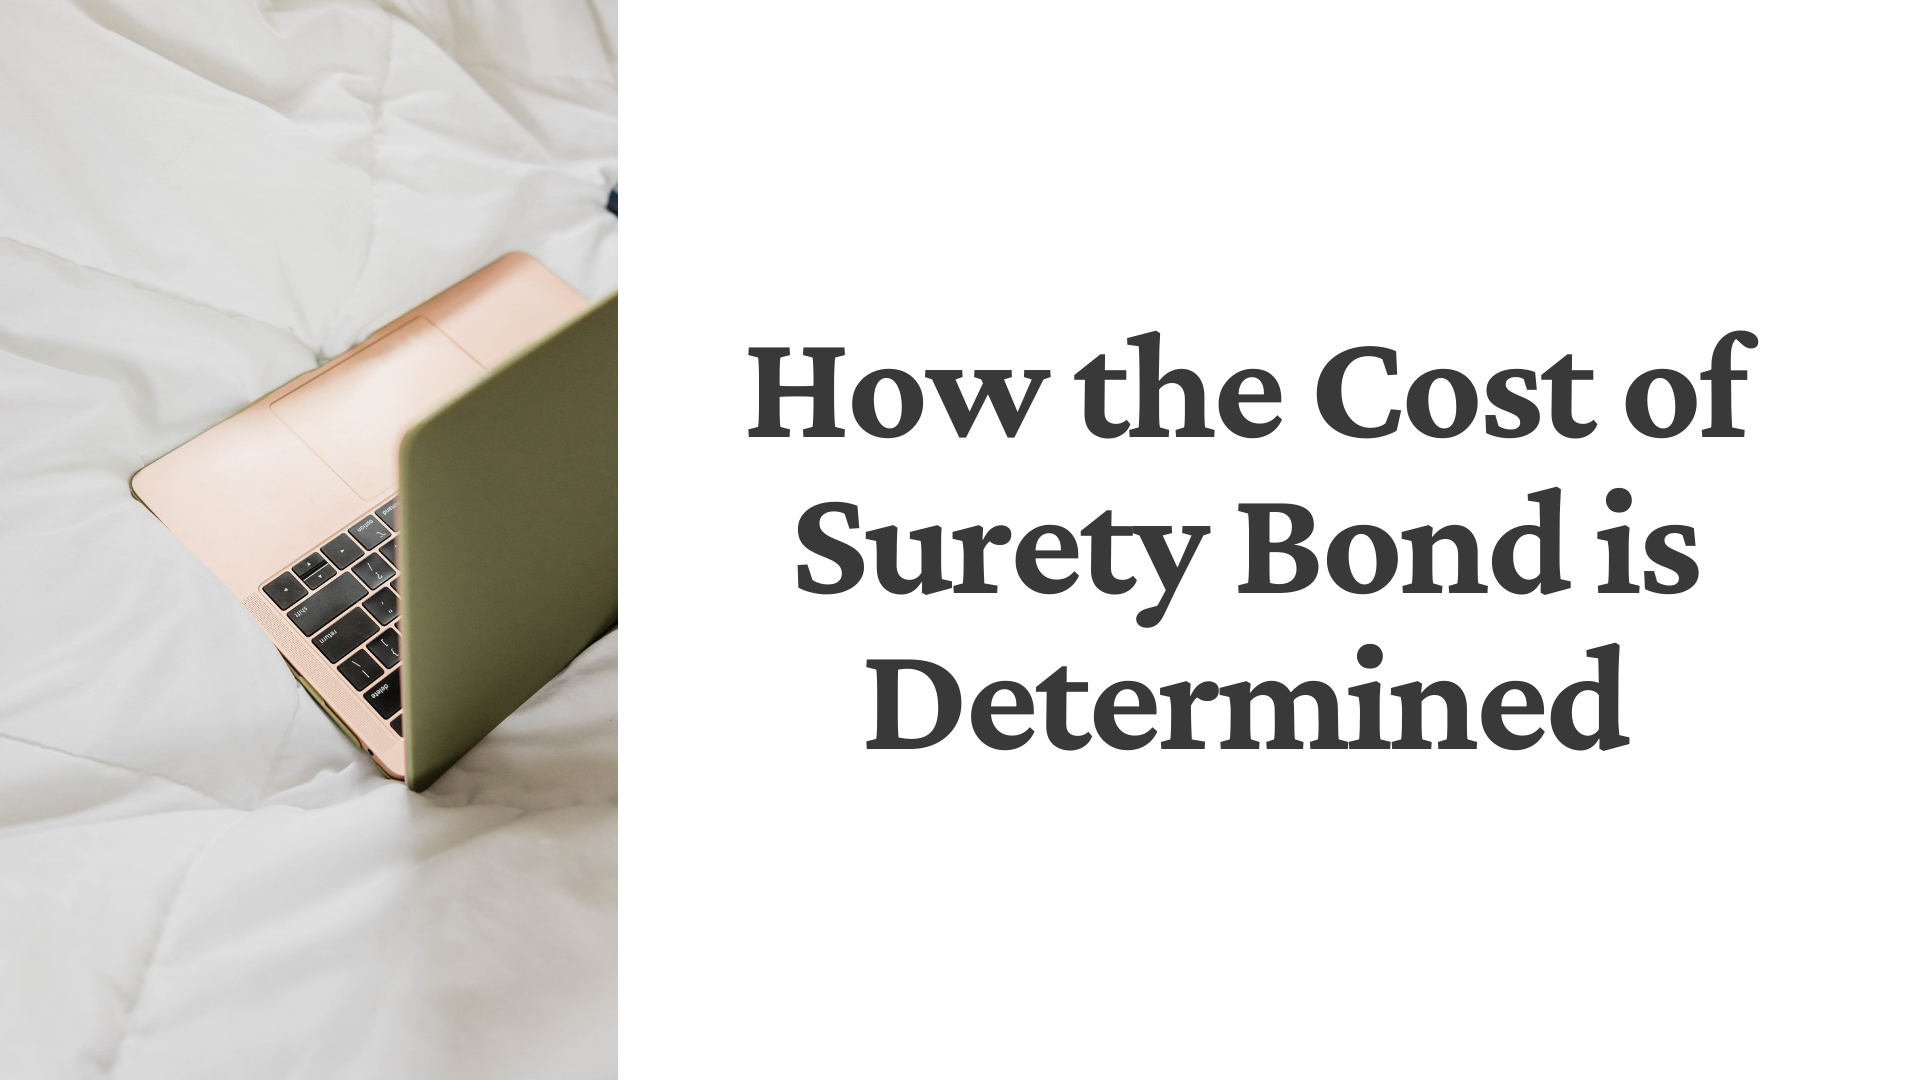 surety bond - How much does a surety bond cost